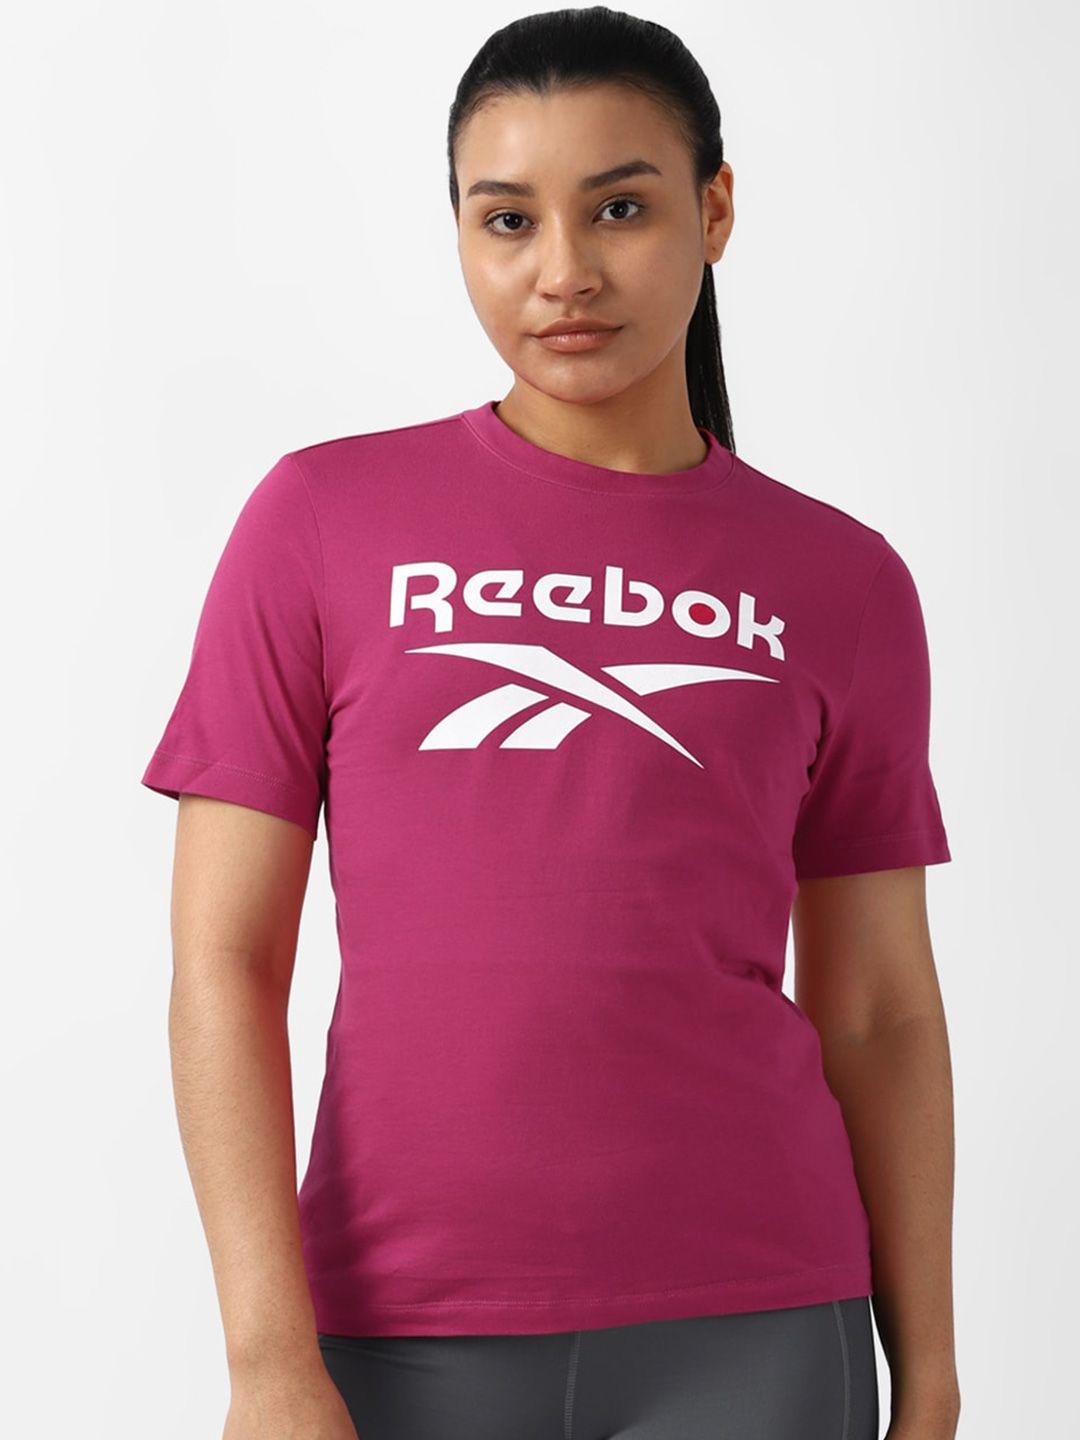 reebok brand logo printed slim fit training app pure cotton t-shirt